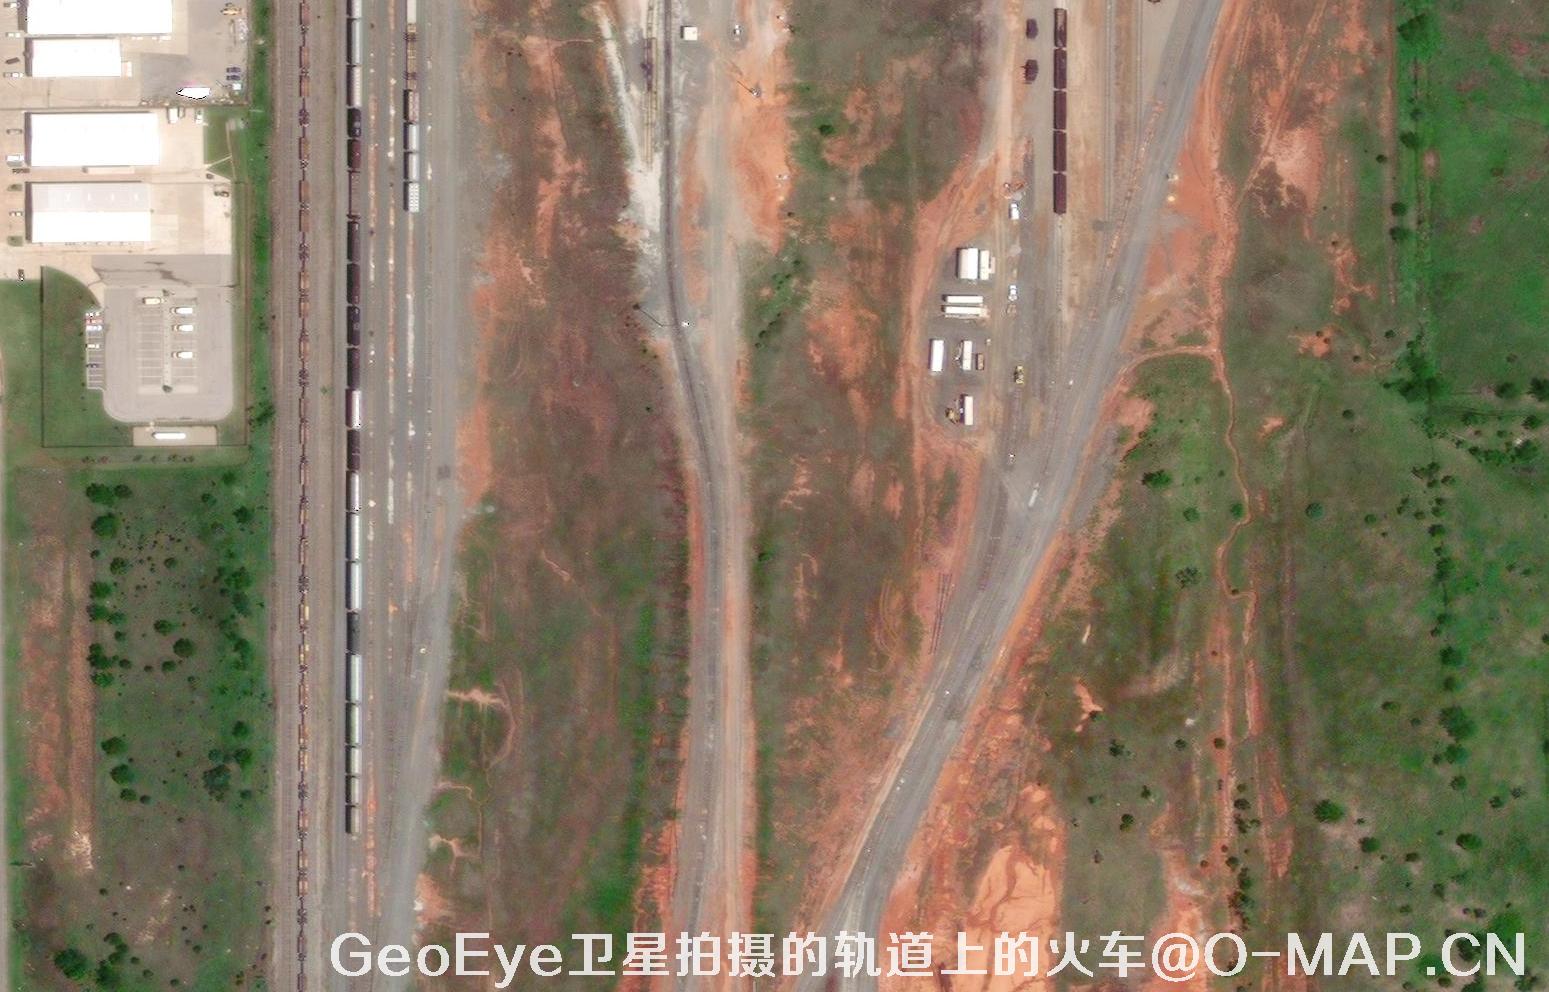 GeoEye卫星拍摄的轨道上的火车